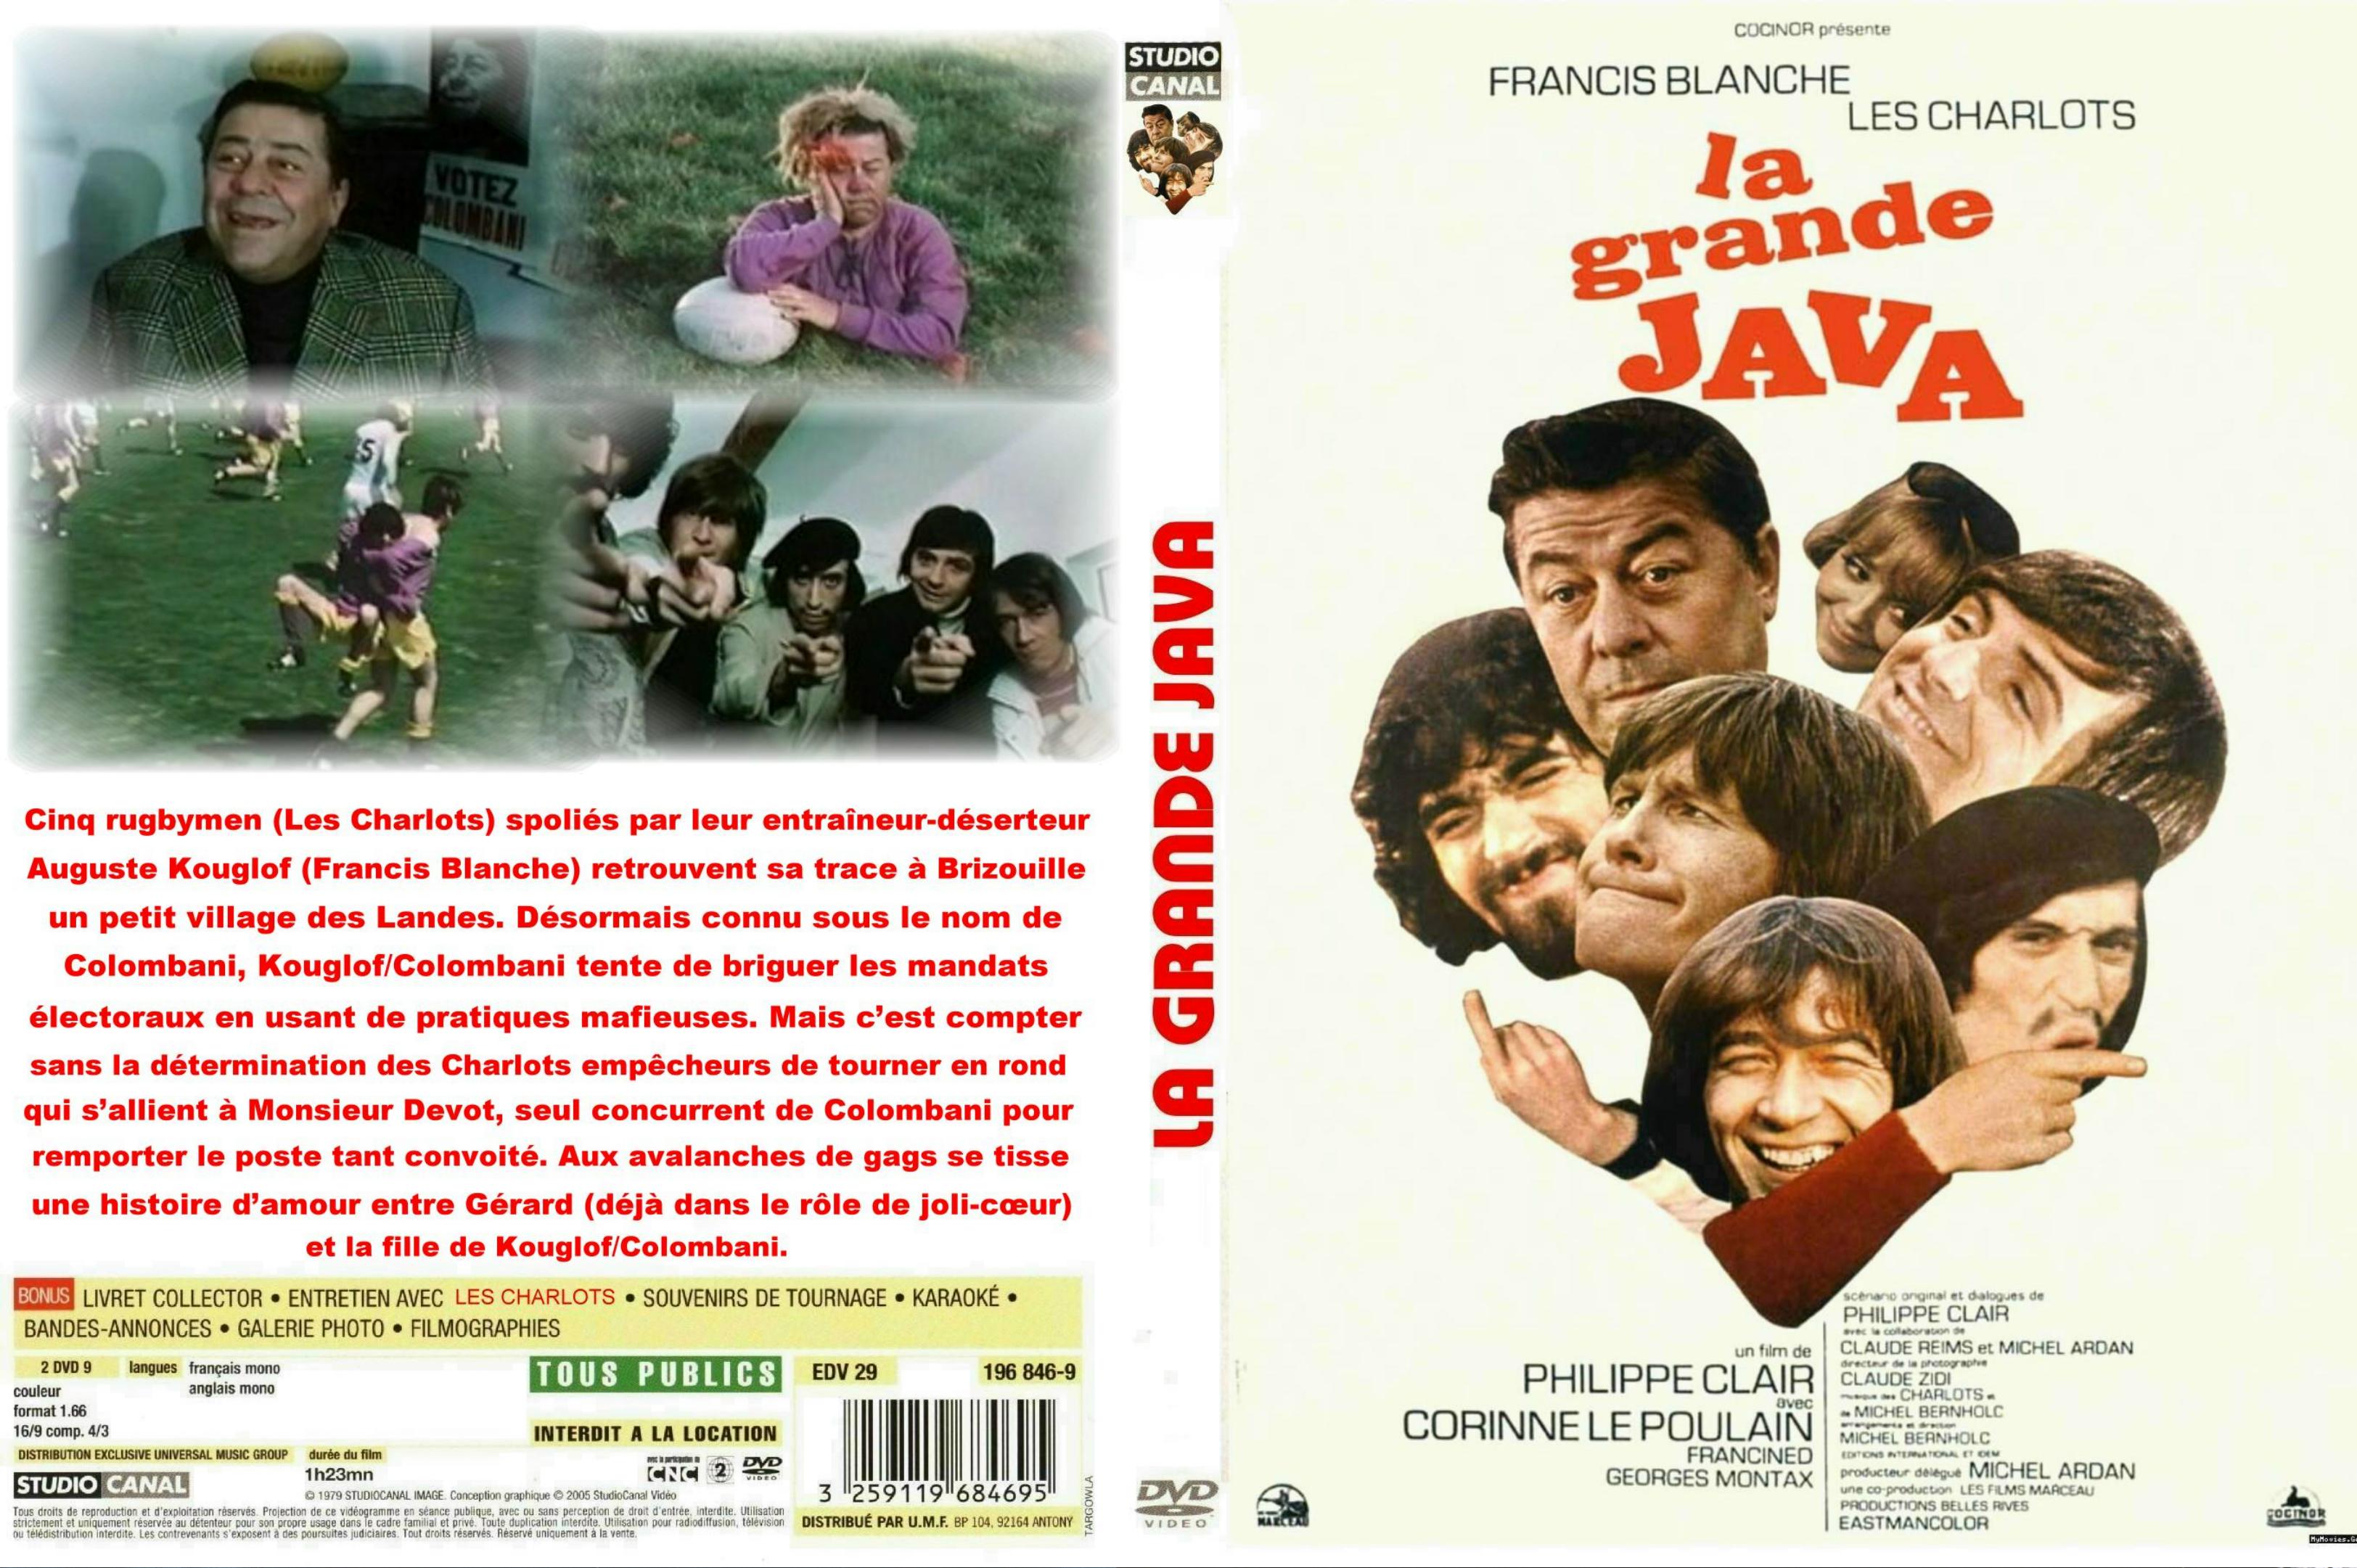 Jaquette DVD La grande java custom